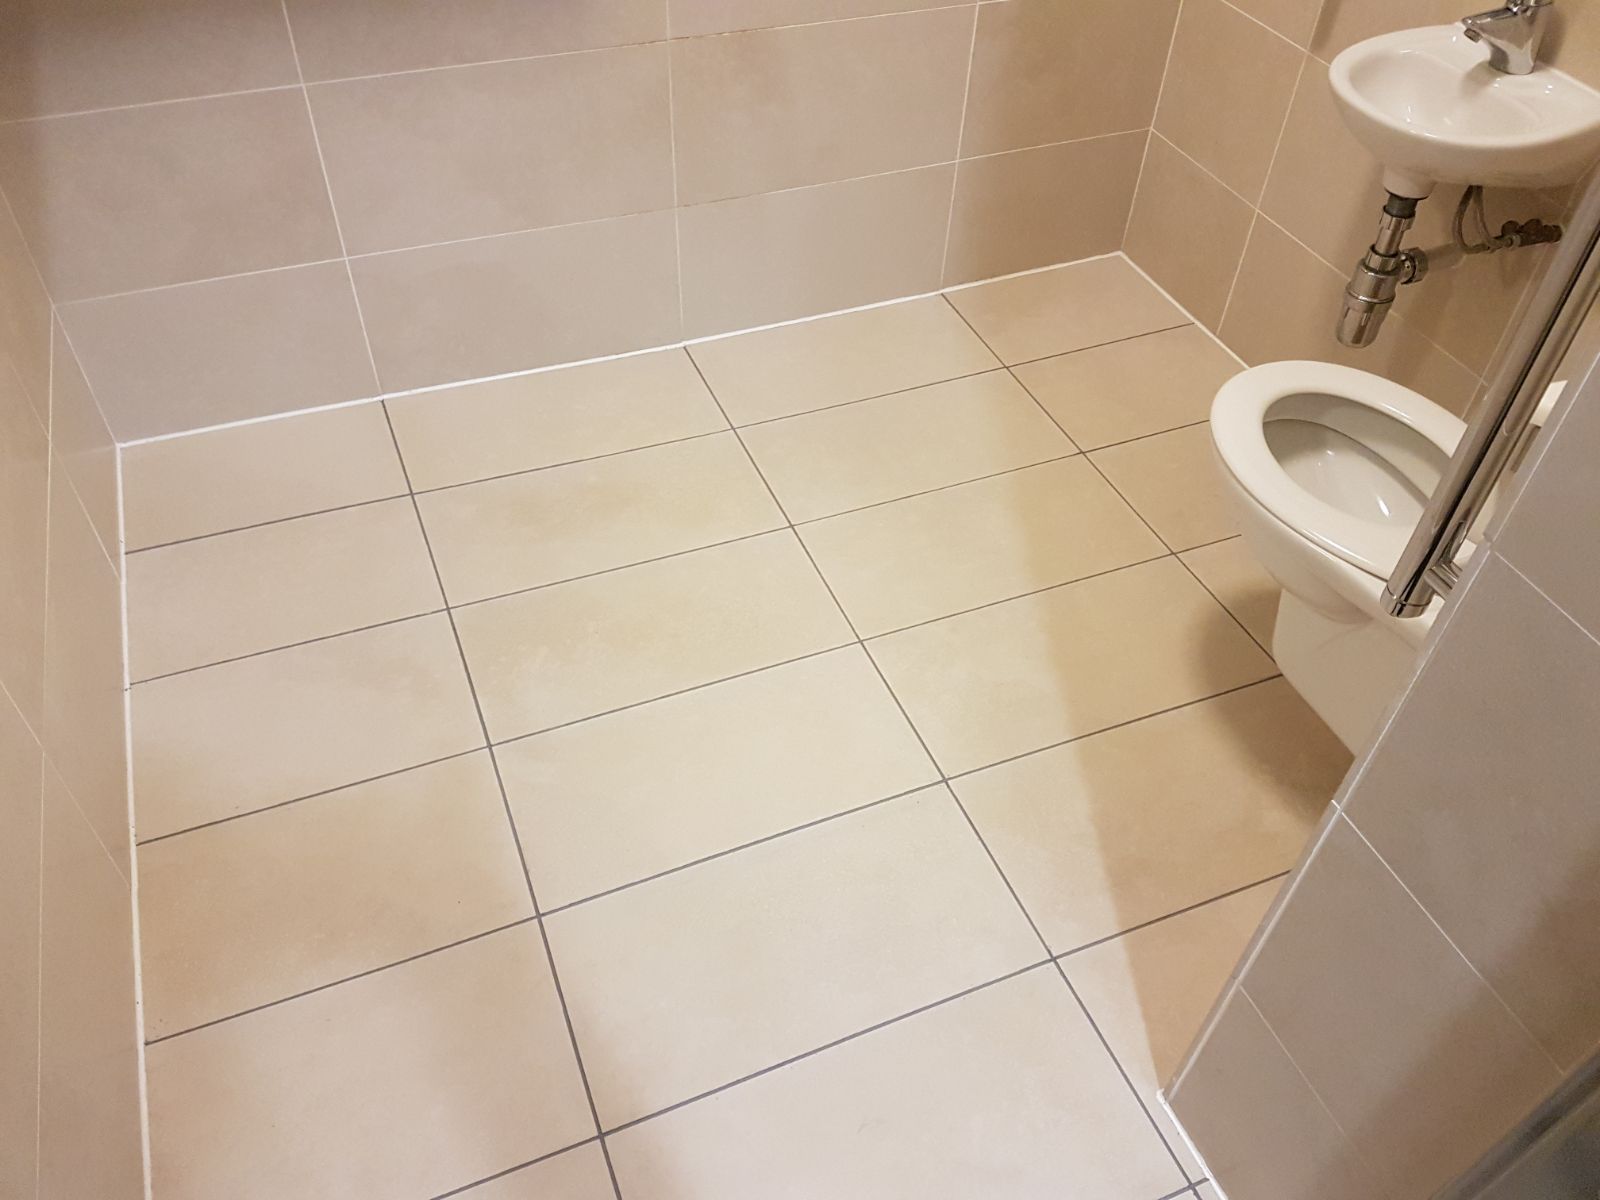 Commerical Porcelain Toilet floor Milton Keynes After Grout Colouring